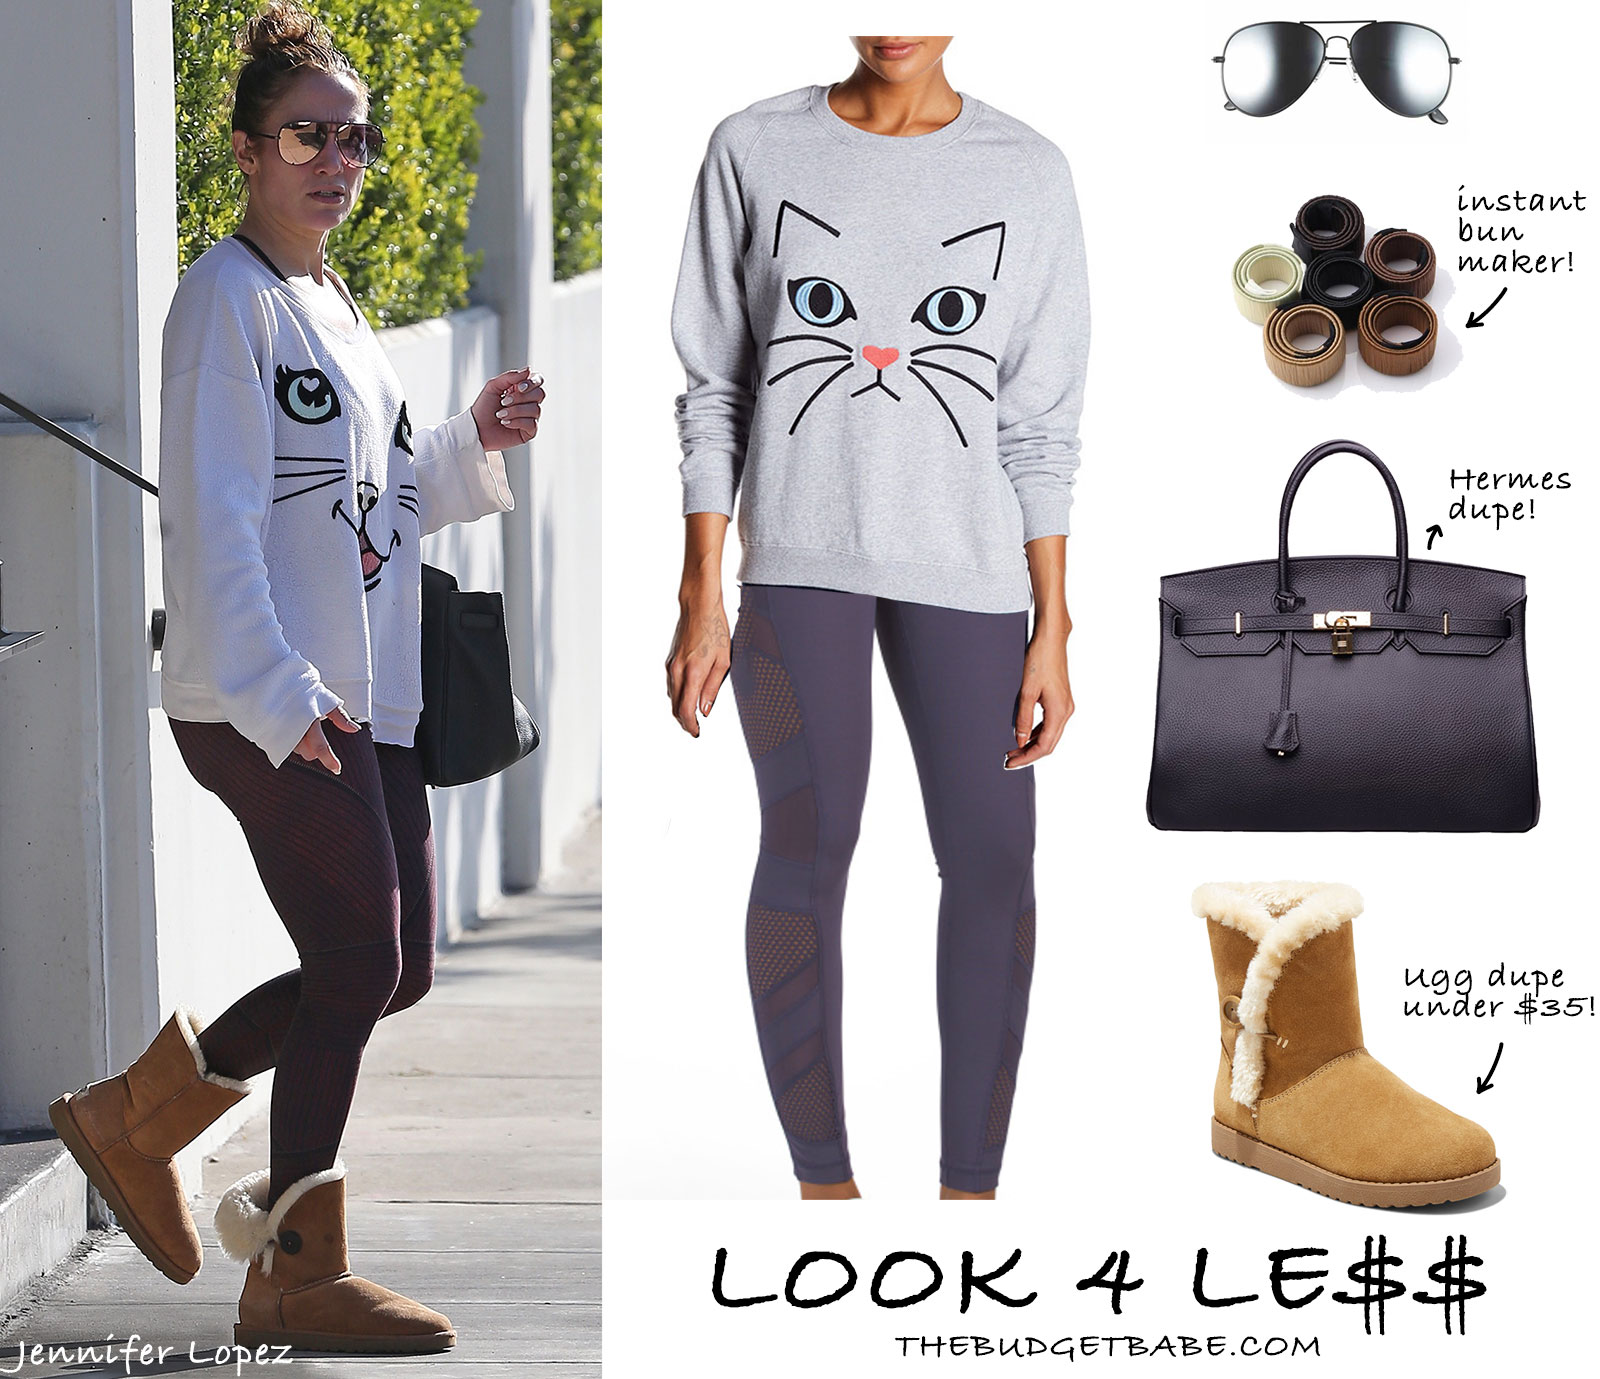 J. Lo's post-workout style: Cat sweatshirt, mesh panel leggings and Ugg boots